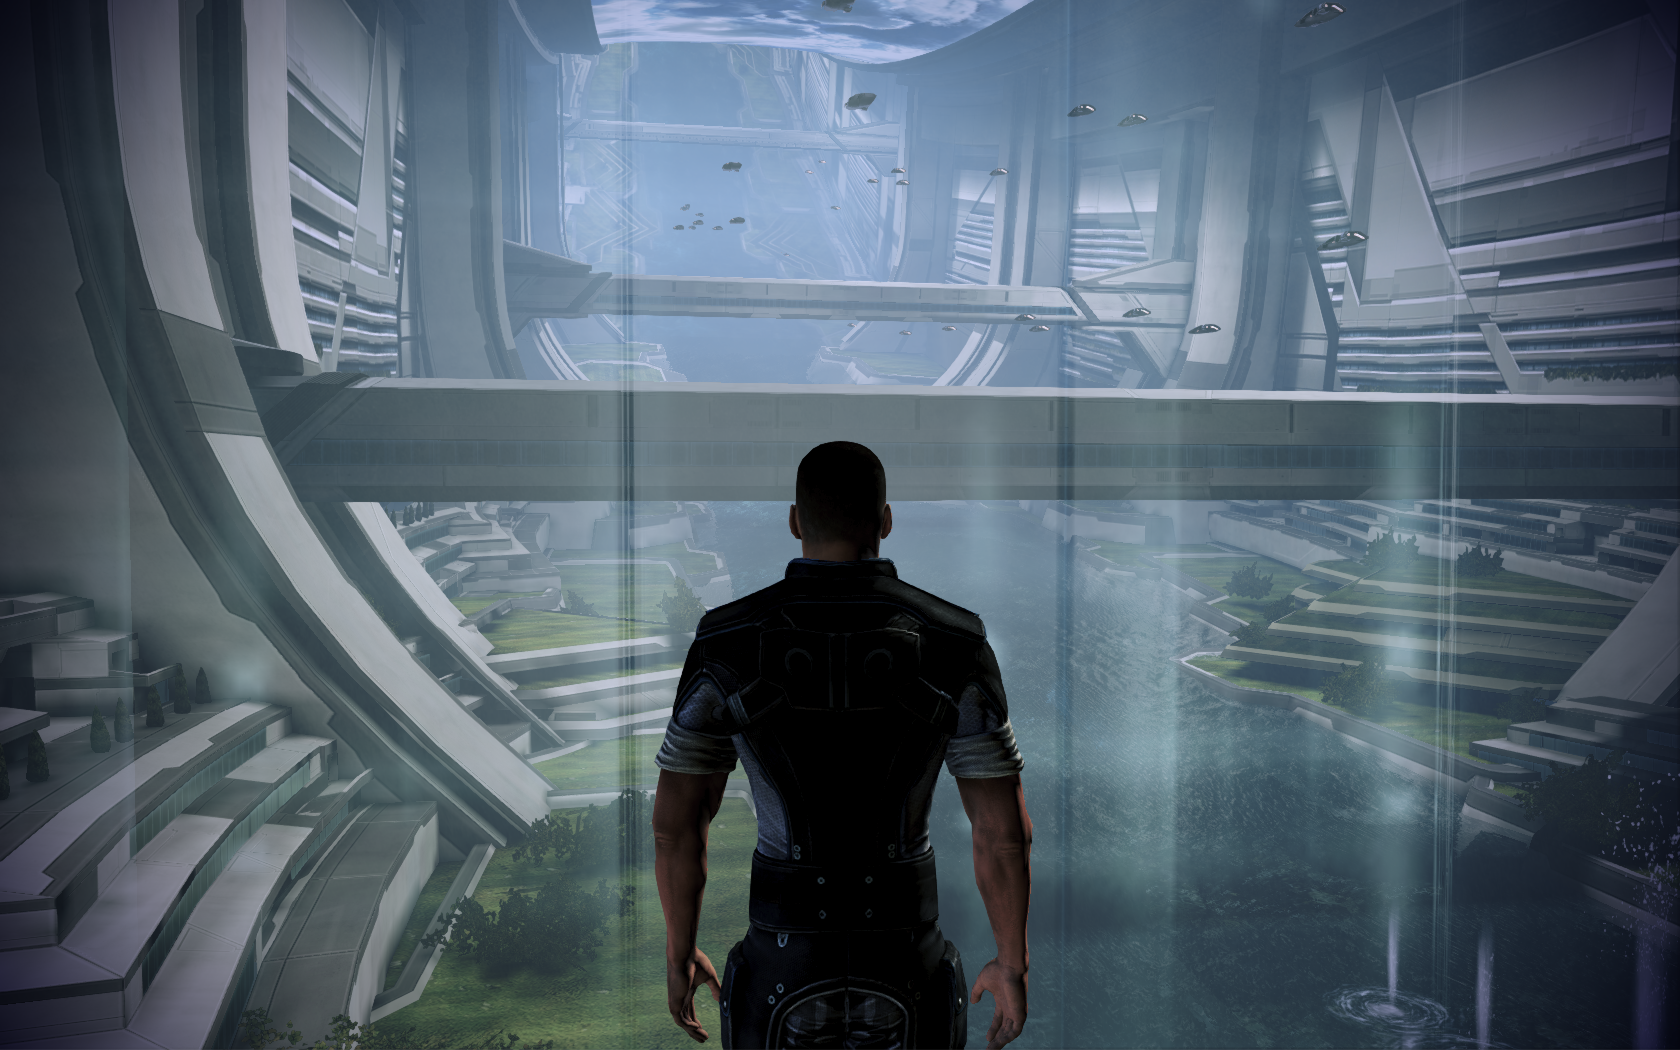 Mass Effect 3 Цитадель